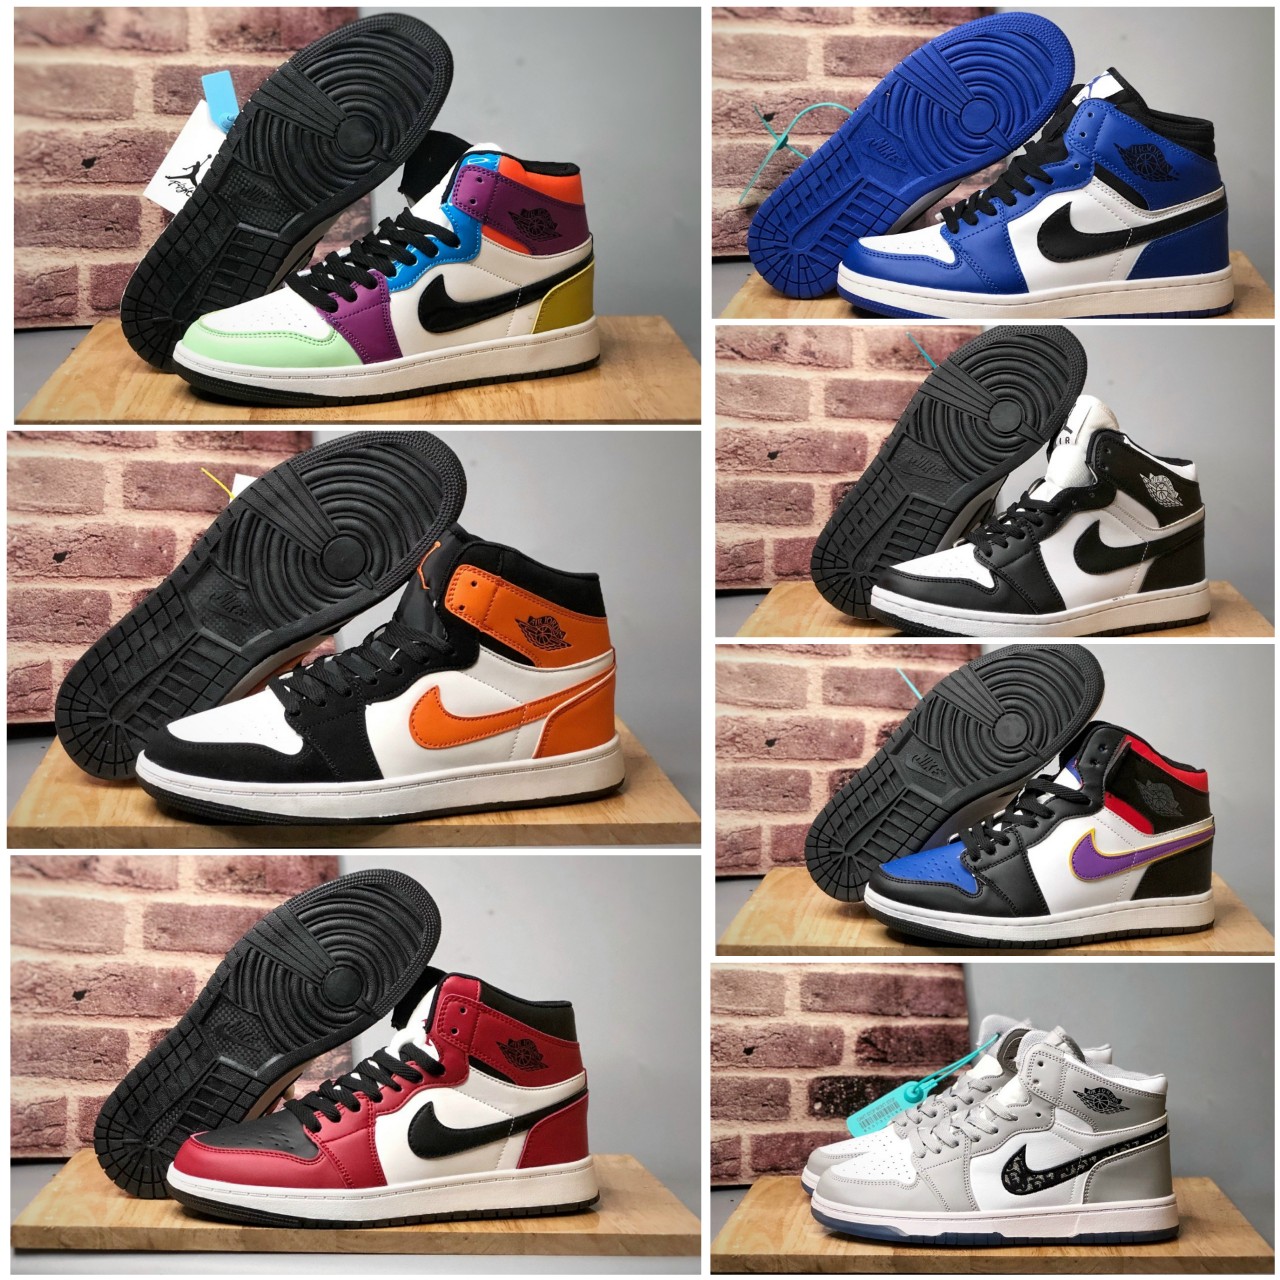 Sỉ Giày Nike Jordan cổ cao - Số 1 Nguồn Sỉ Giày Thể Thao F1, Super Fake,  Rep, Rep 1:1